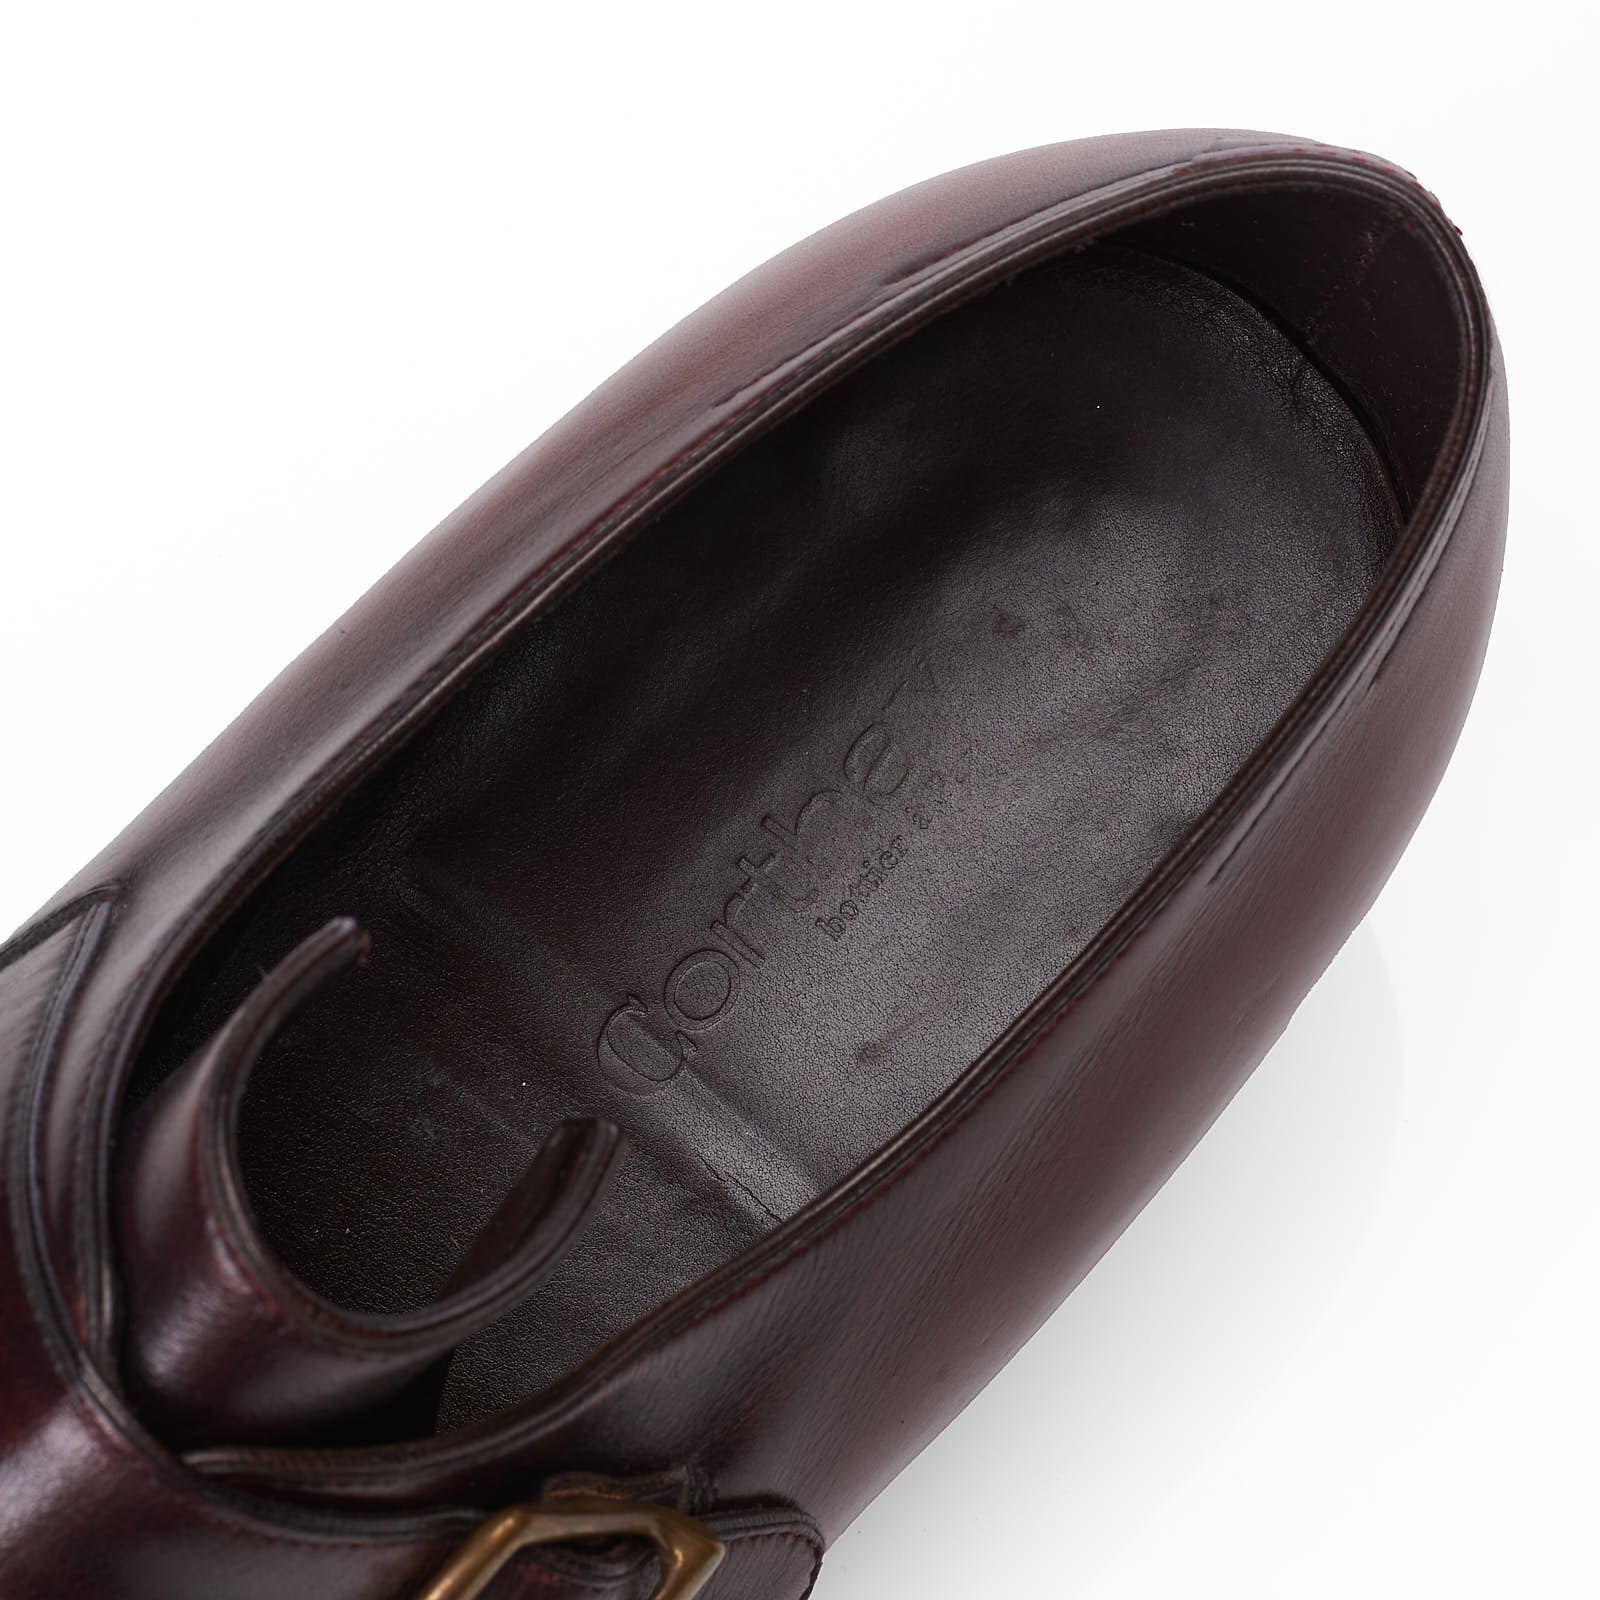 CORTHAY Paris "Arca Buckle" Burgundy Calf Leather Single Monk Dress Shoes Size 7.5